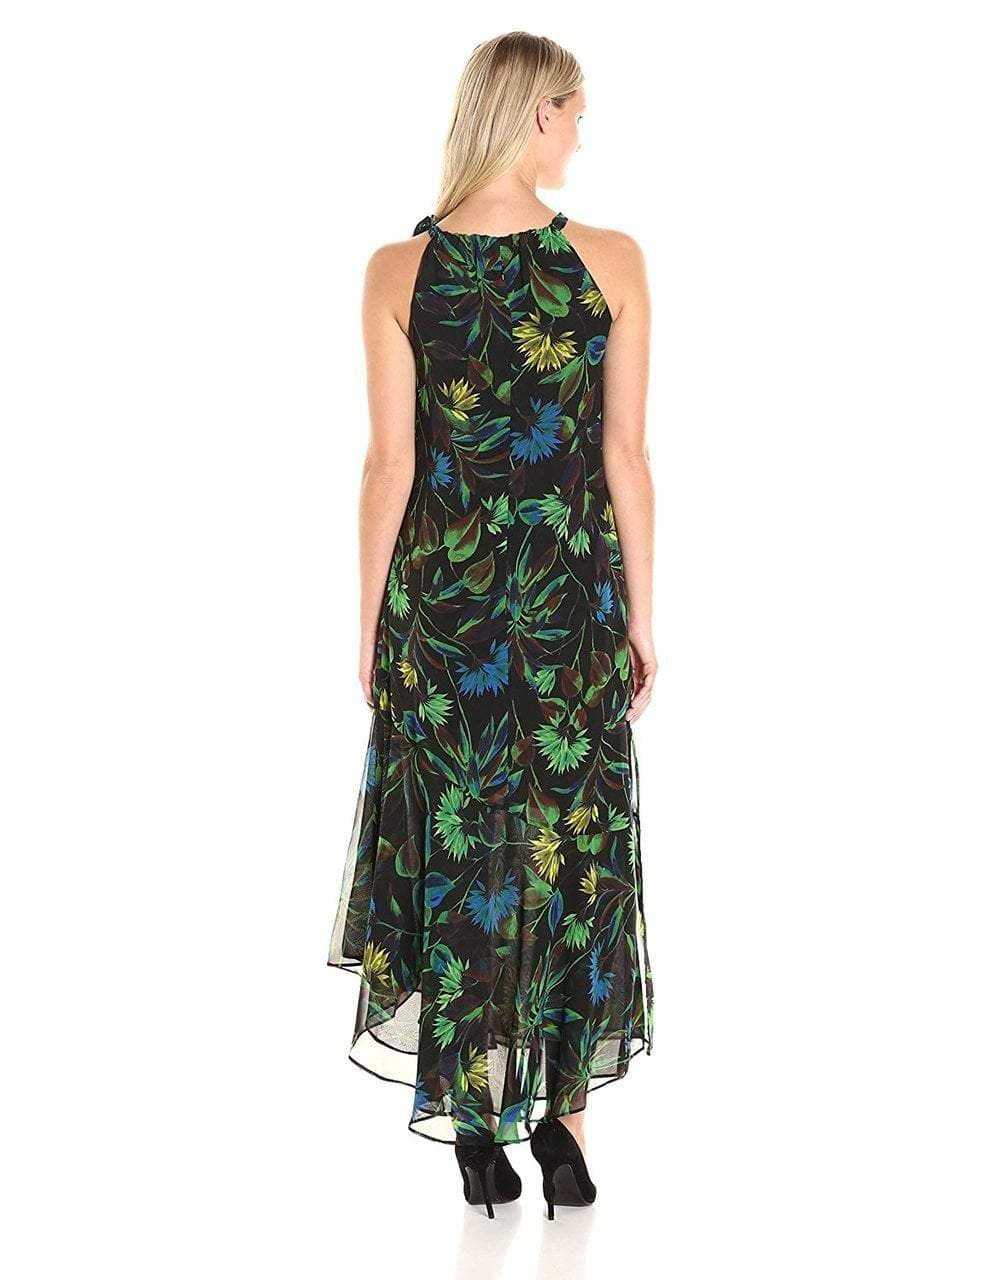 Taylor, Taylor - Floral Printed Sheath Dress 8749M